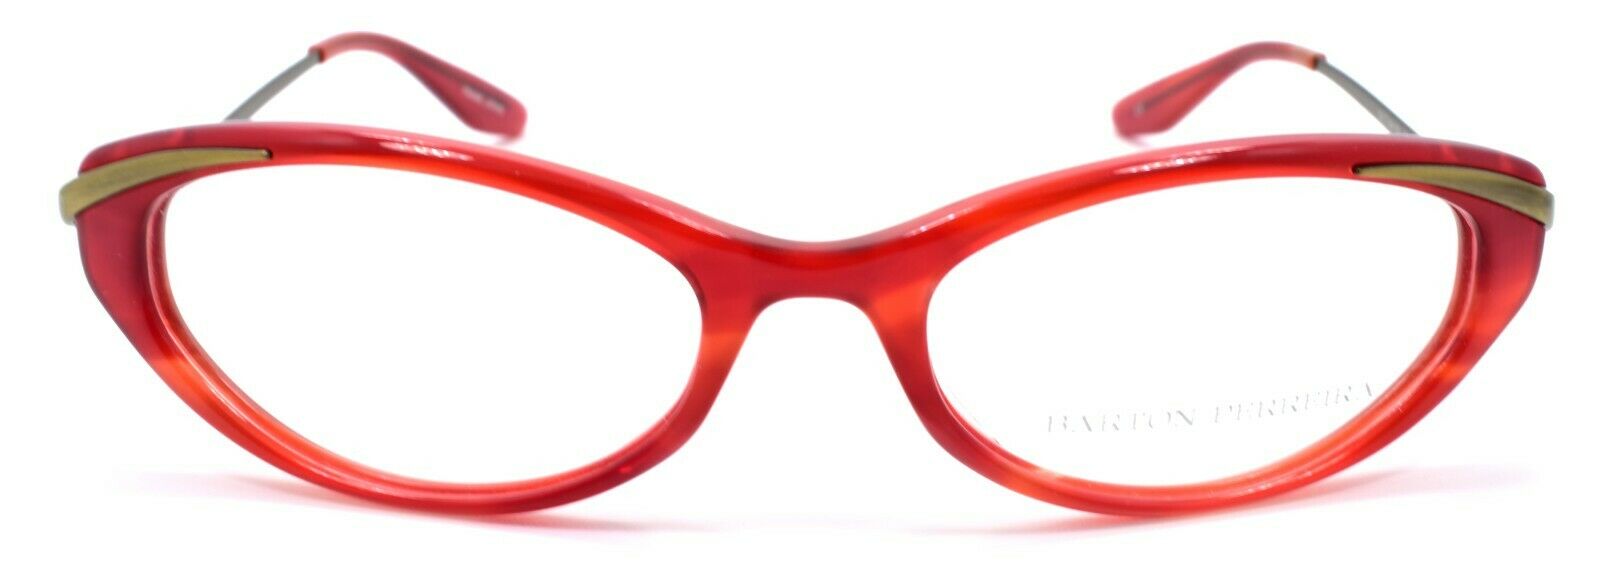 2-Barton Perreira Sweet Nadine Women's Glasses Frames 53-18-133 Scarlet Red-672263039709-IKSpecs